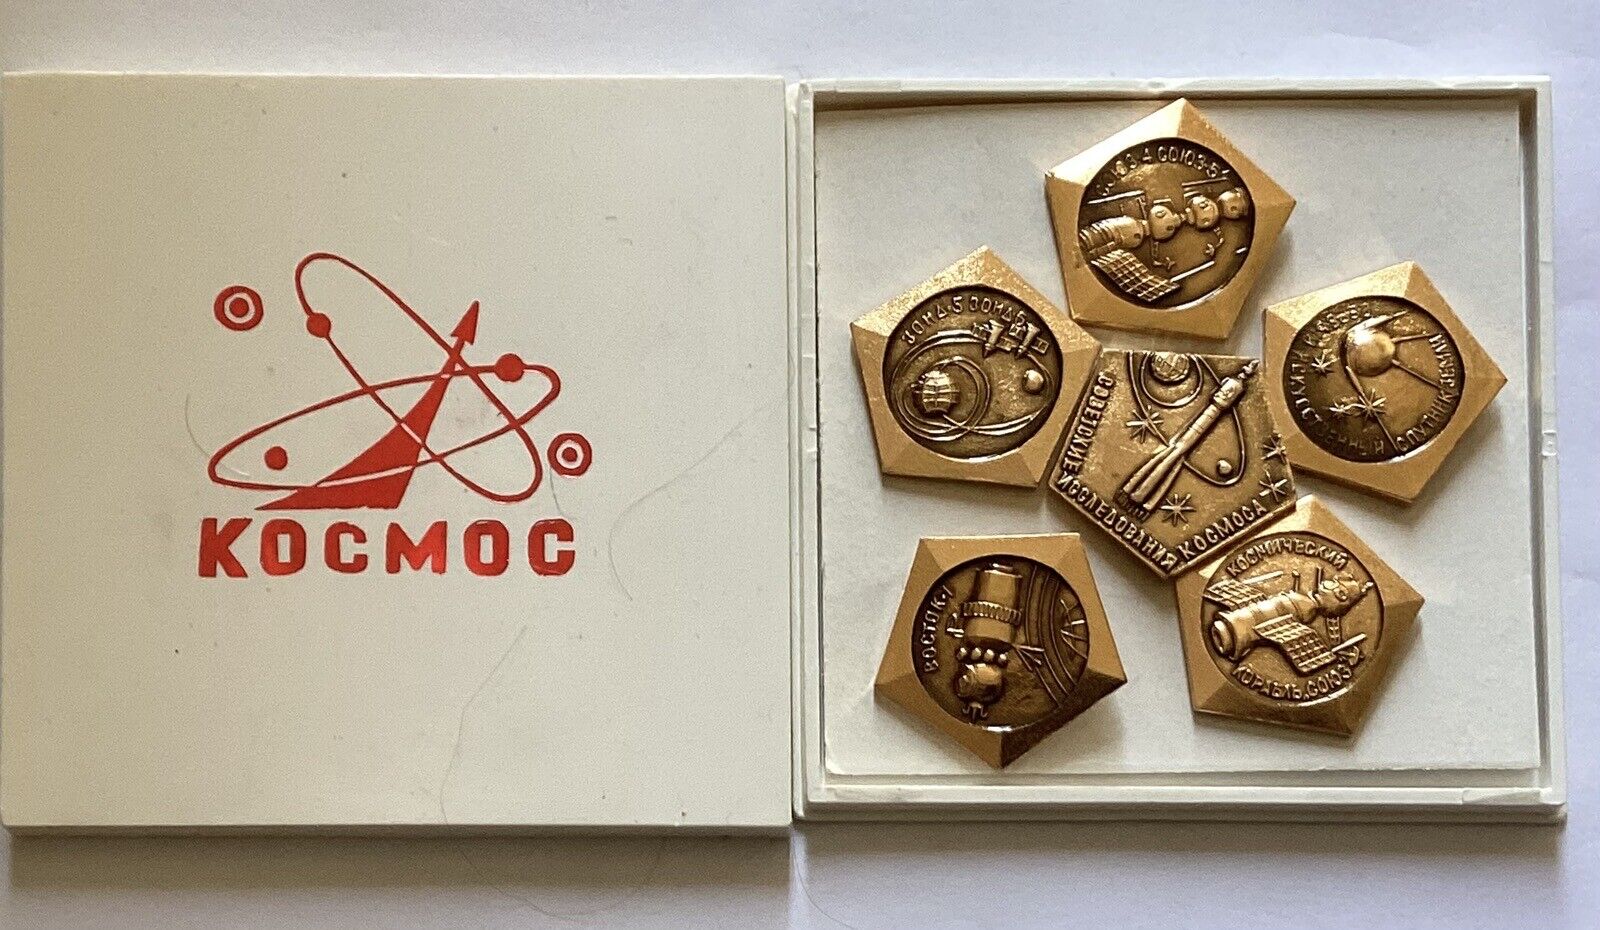 Rare Set of 5 VTG USSR Soviet Space Exploration Kocmoc Pins in Box, 1961